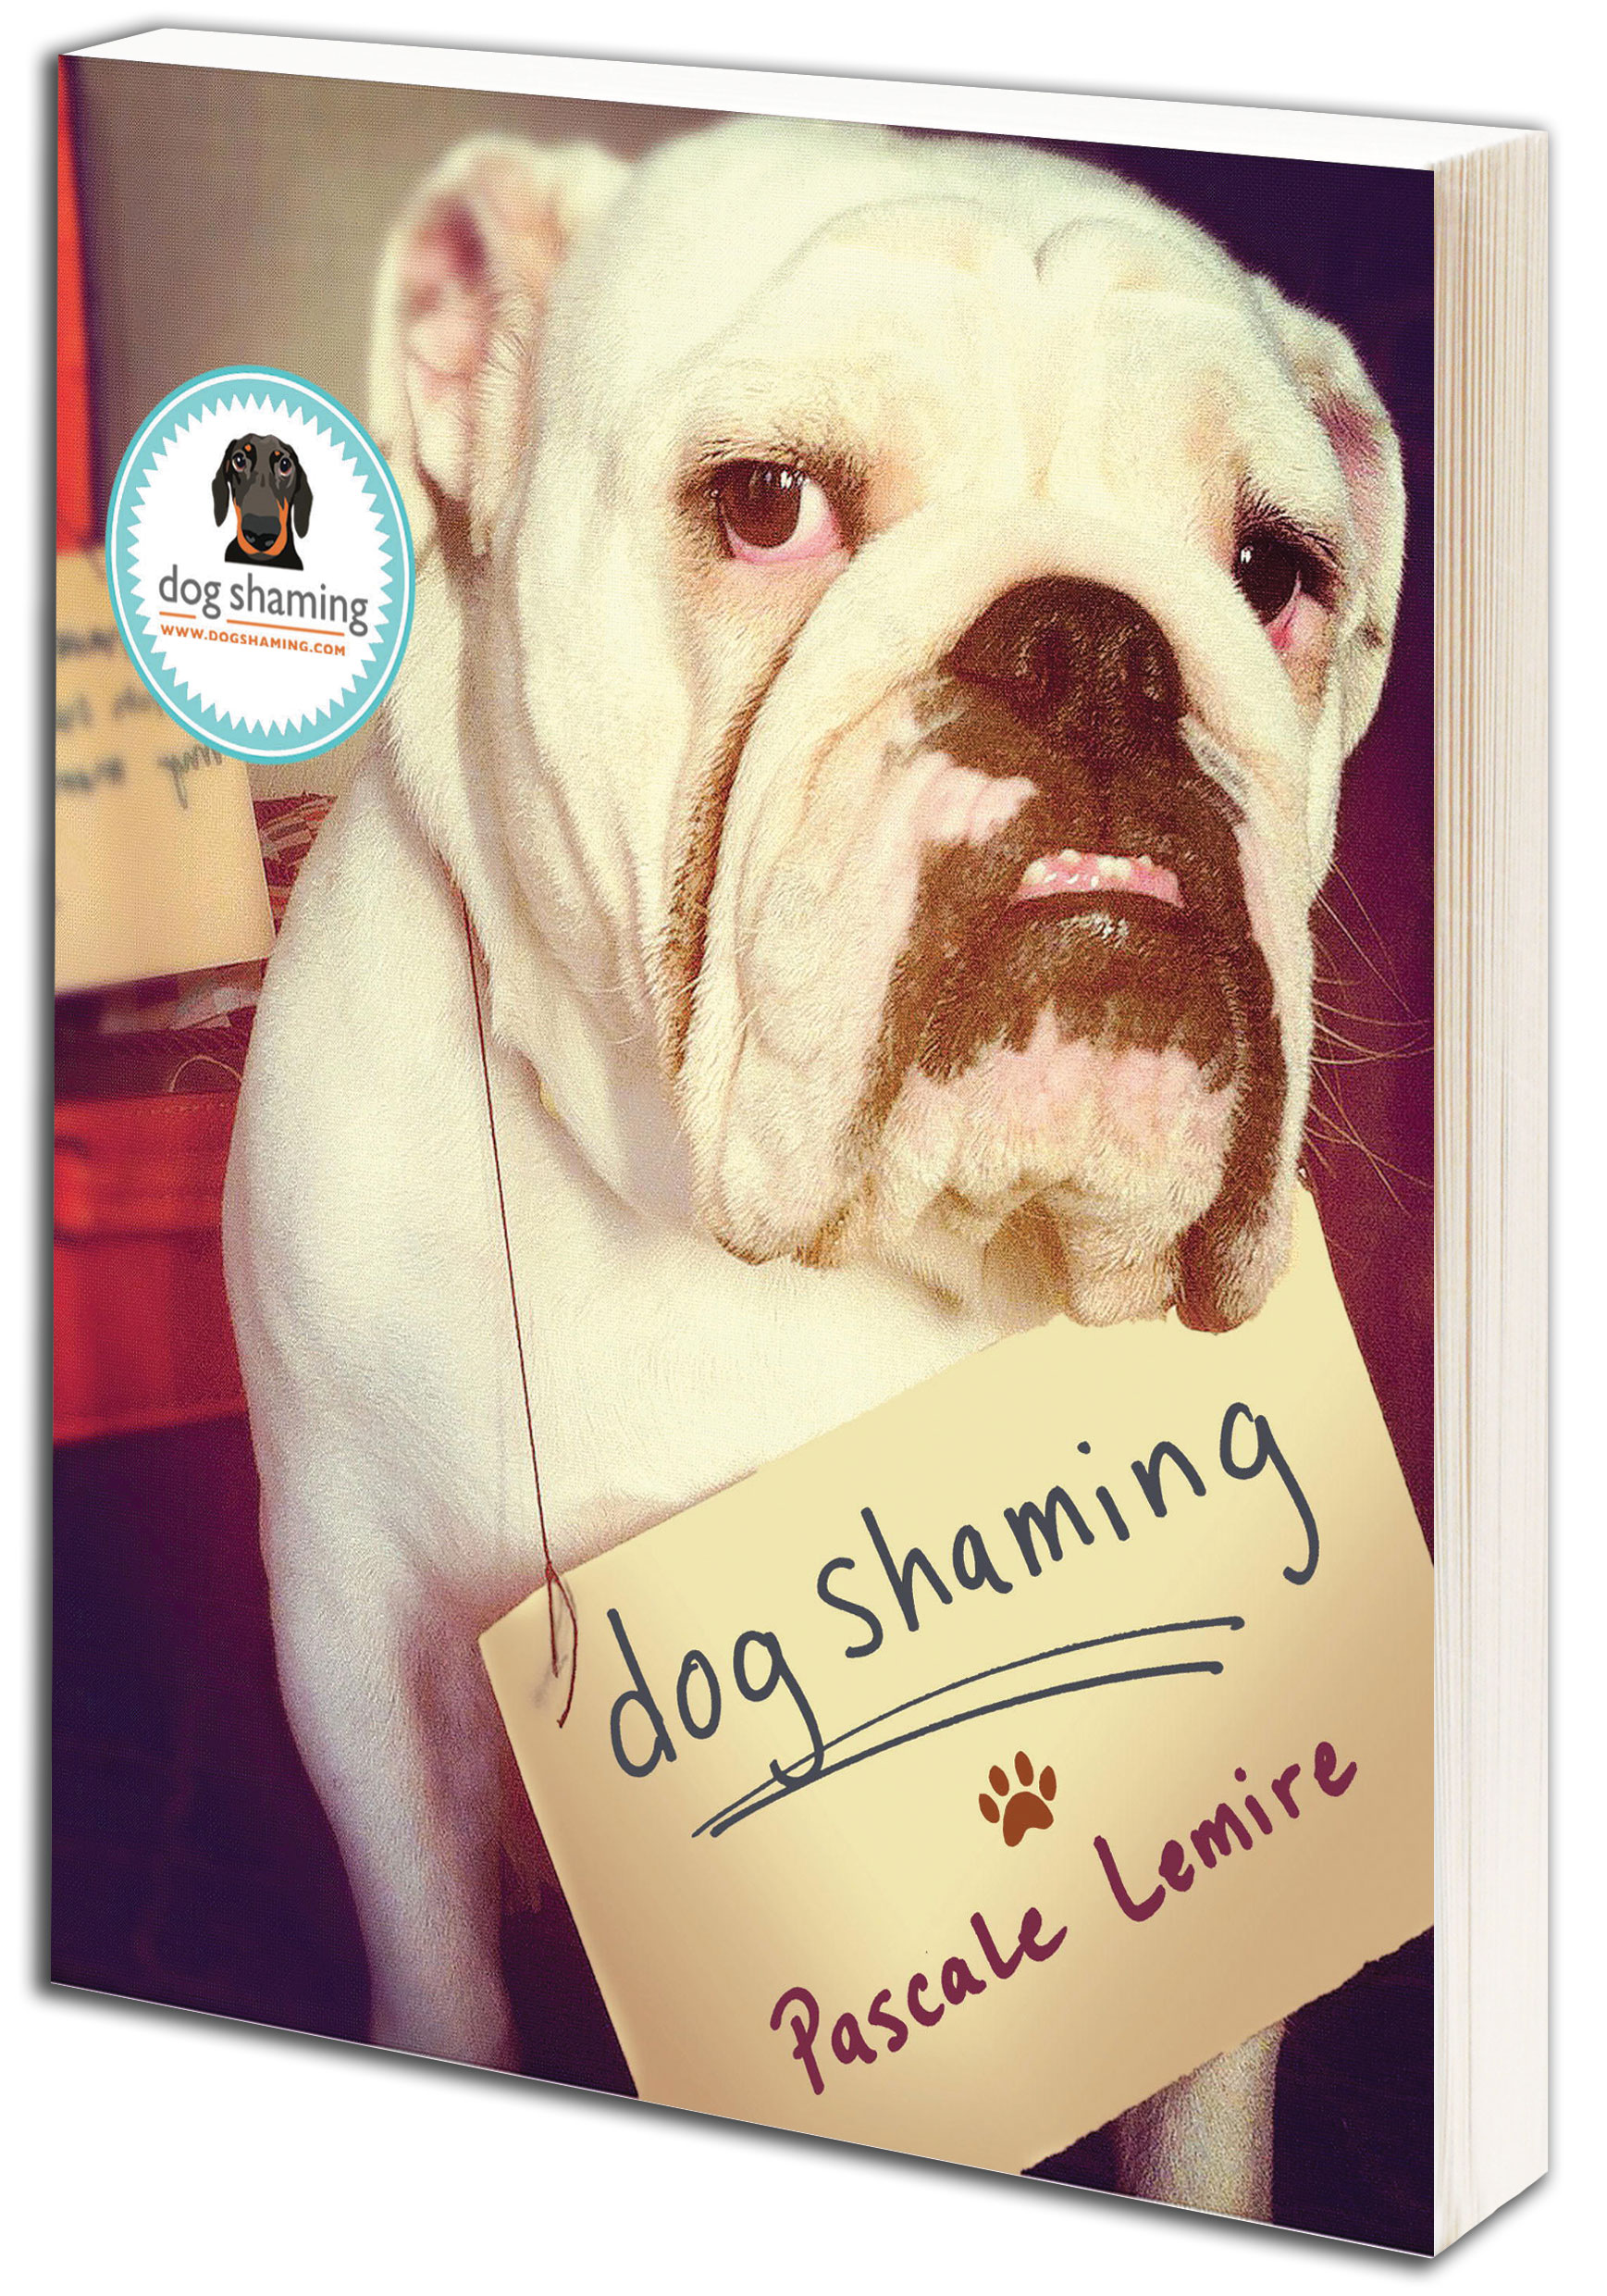  dog shaming 